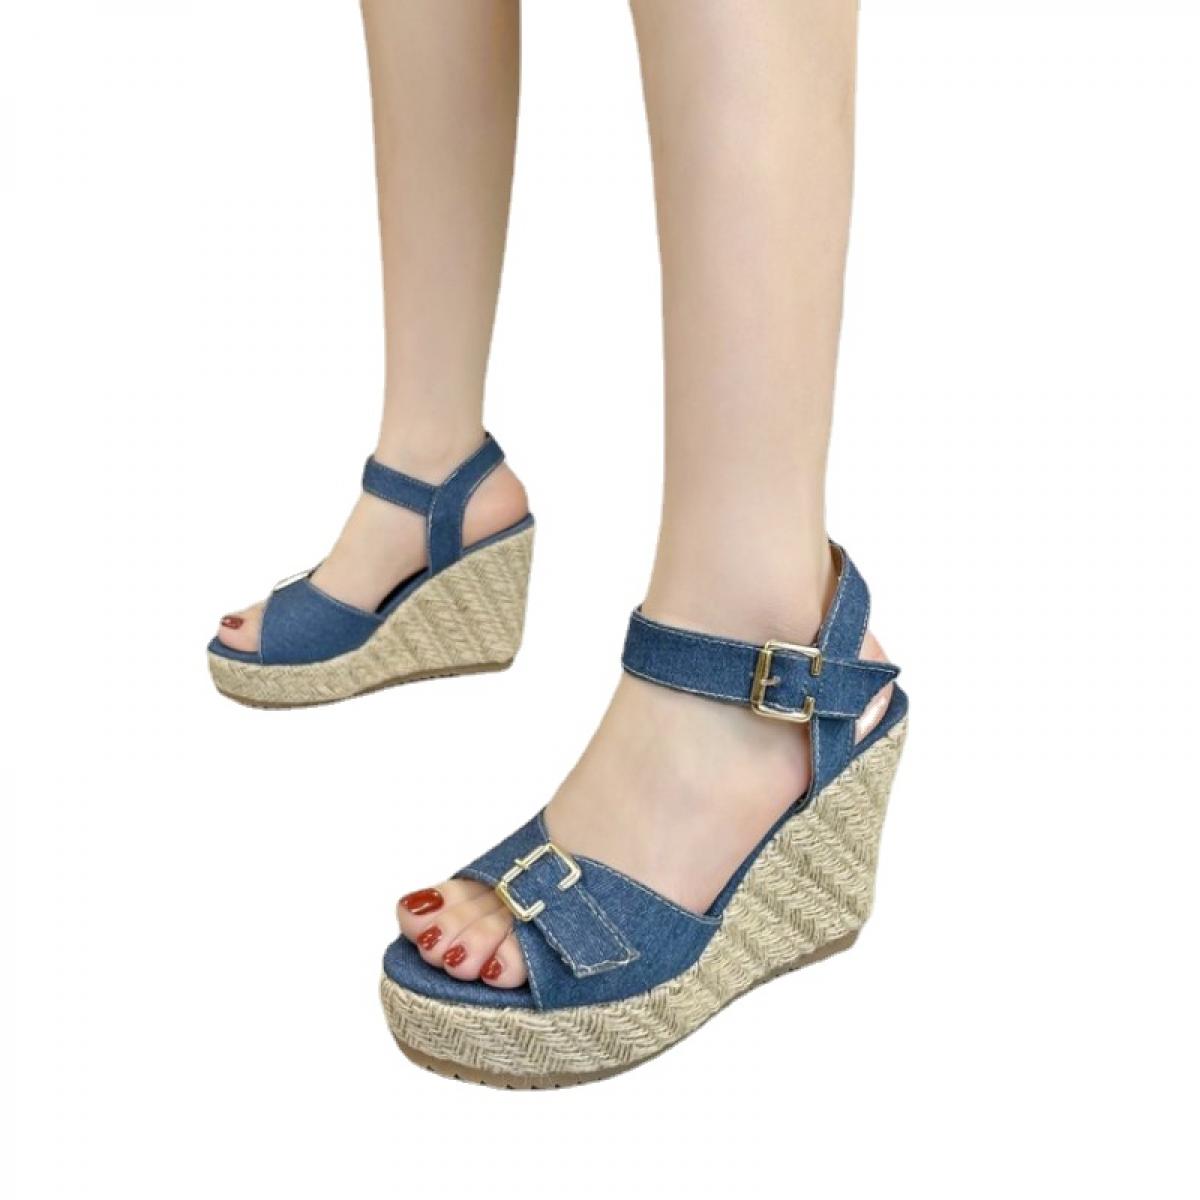 Ladies Esparddrilles Sandals Peep Toe Jute Wedges Denim Buckle Straps Plus Size 30 48 Black Blue Leisure Summer Womens S